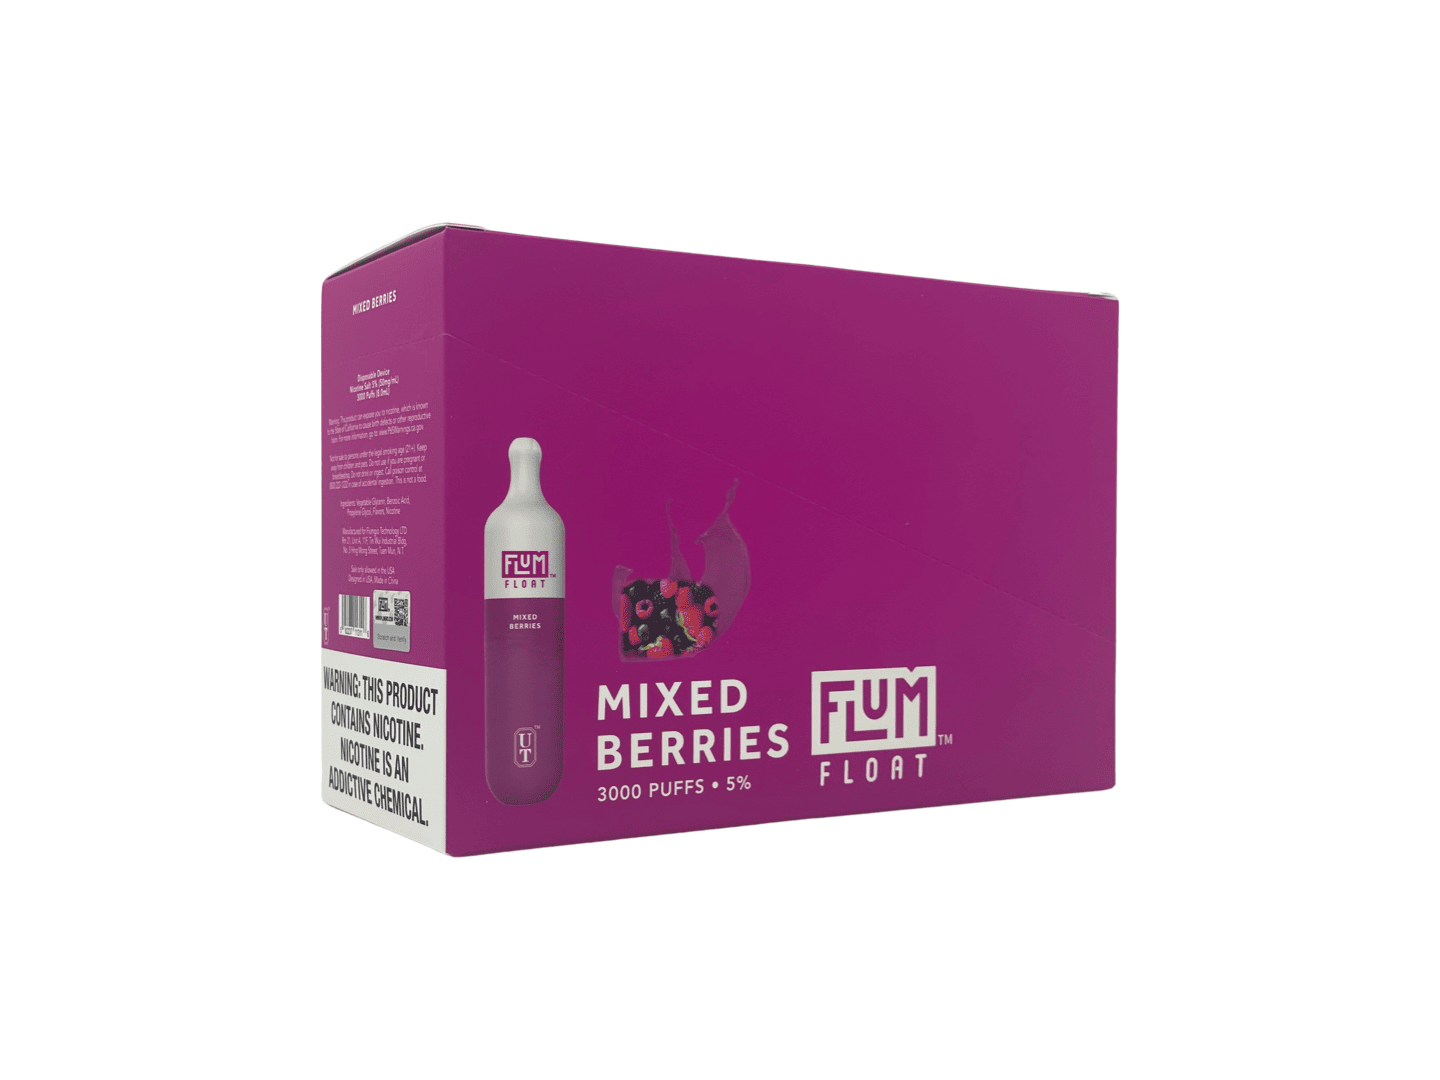 Flum Float Mixed Berries Flavor Box / Brick disposable vape